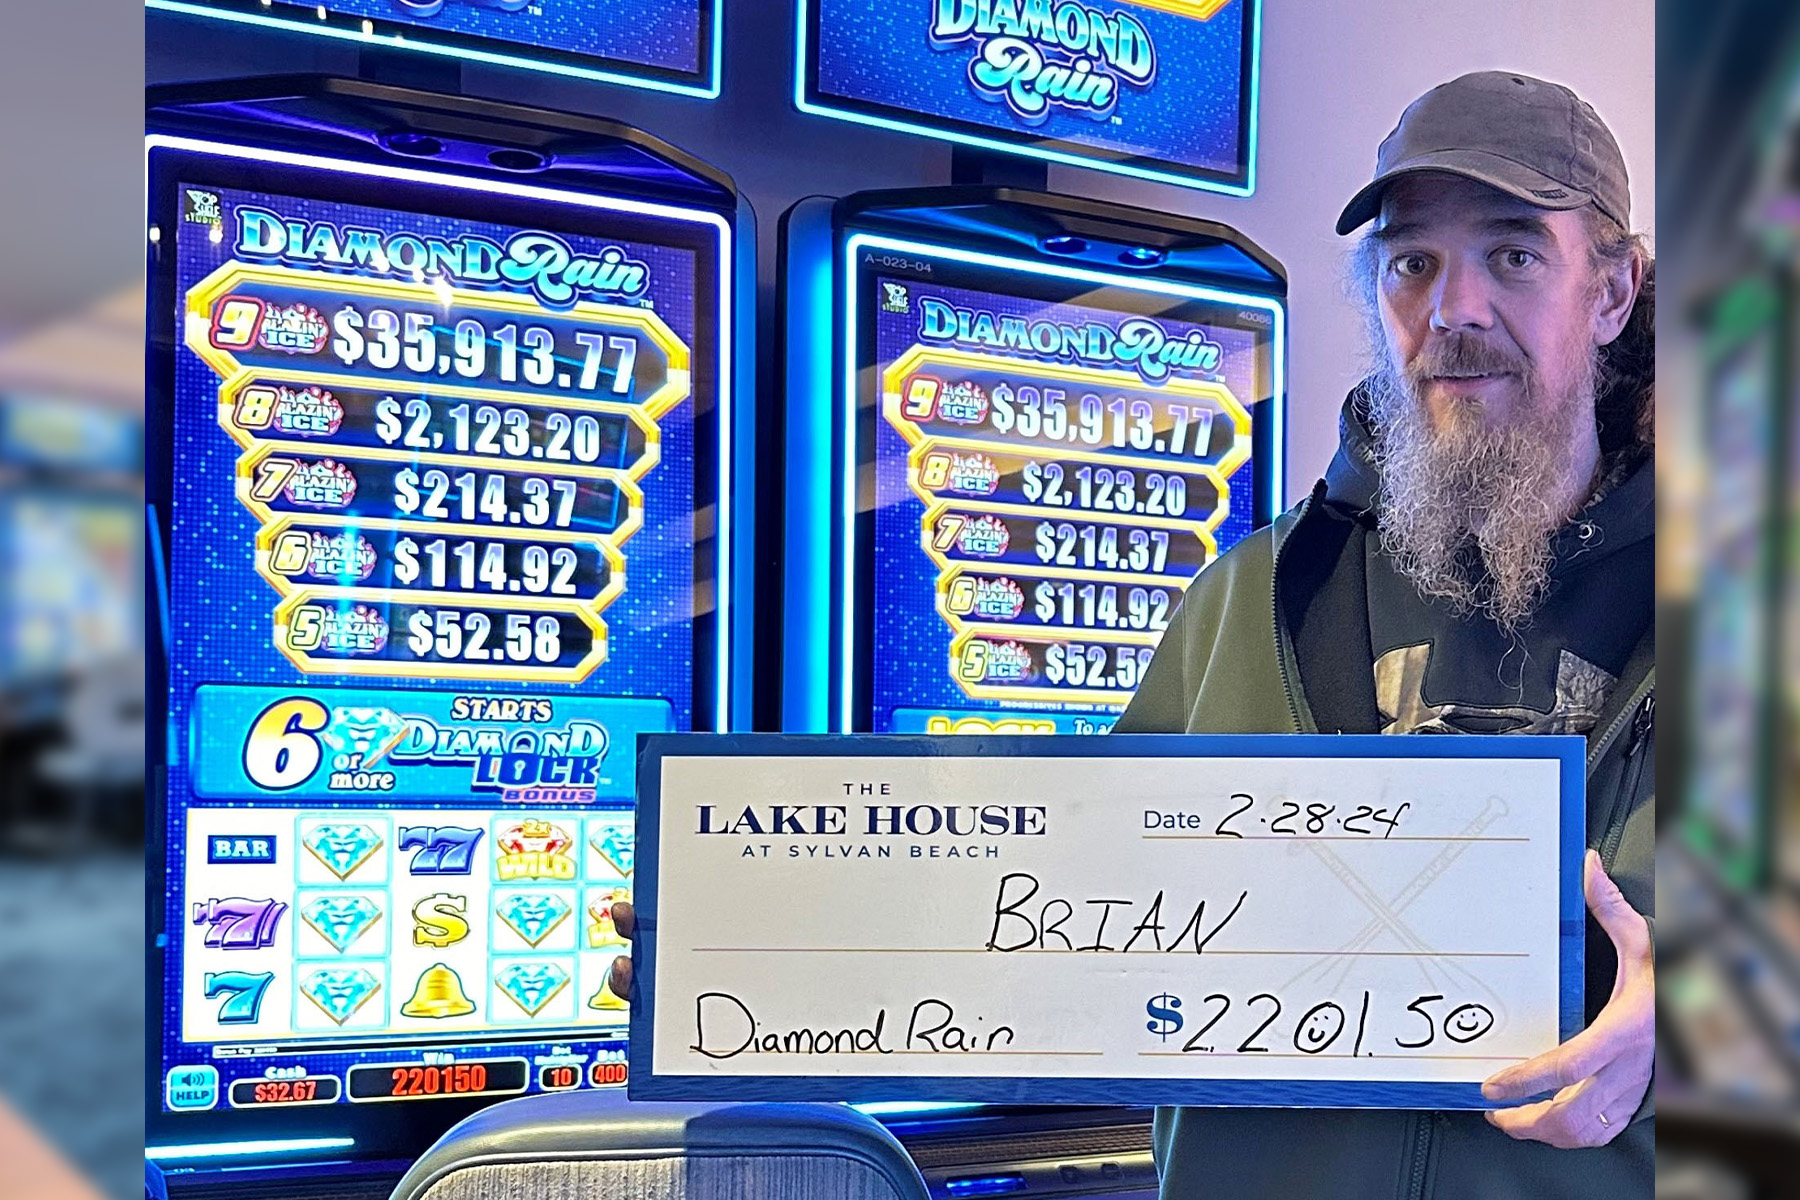 Brian won $2,201